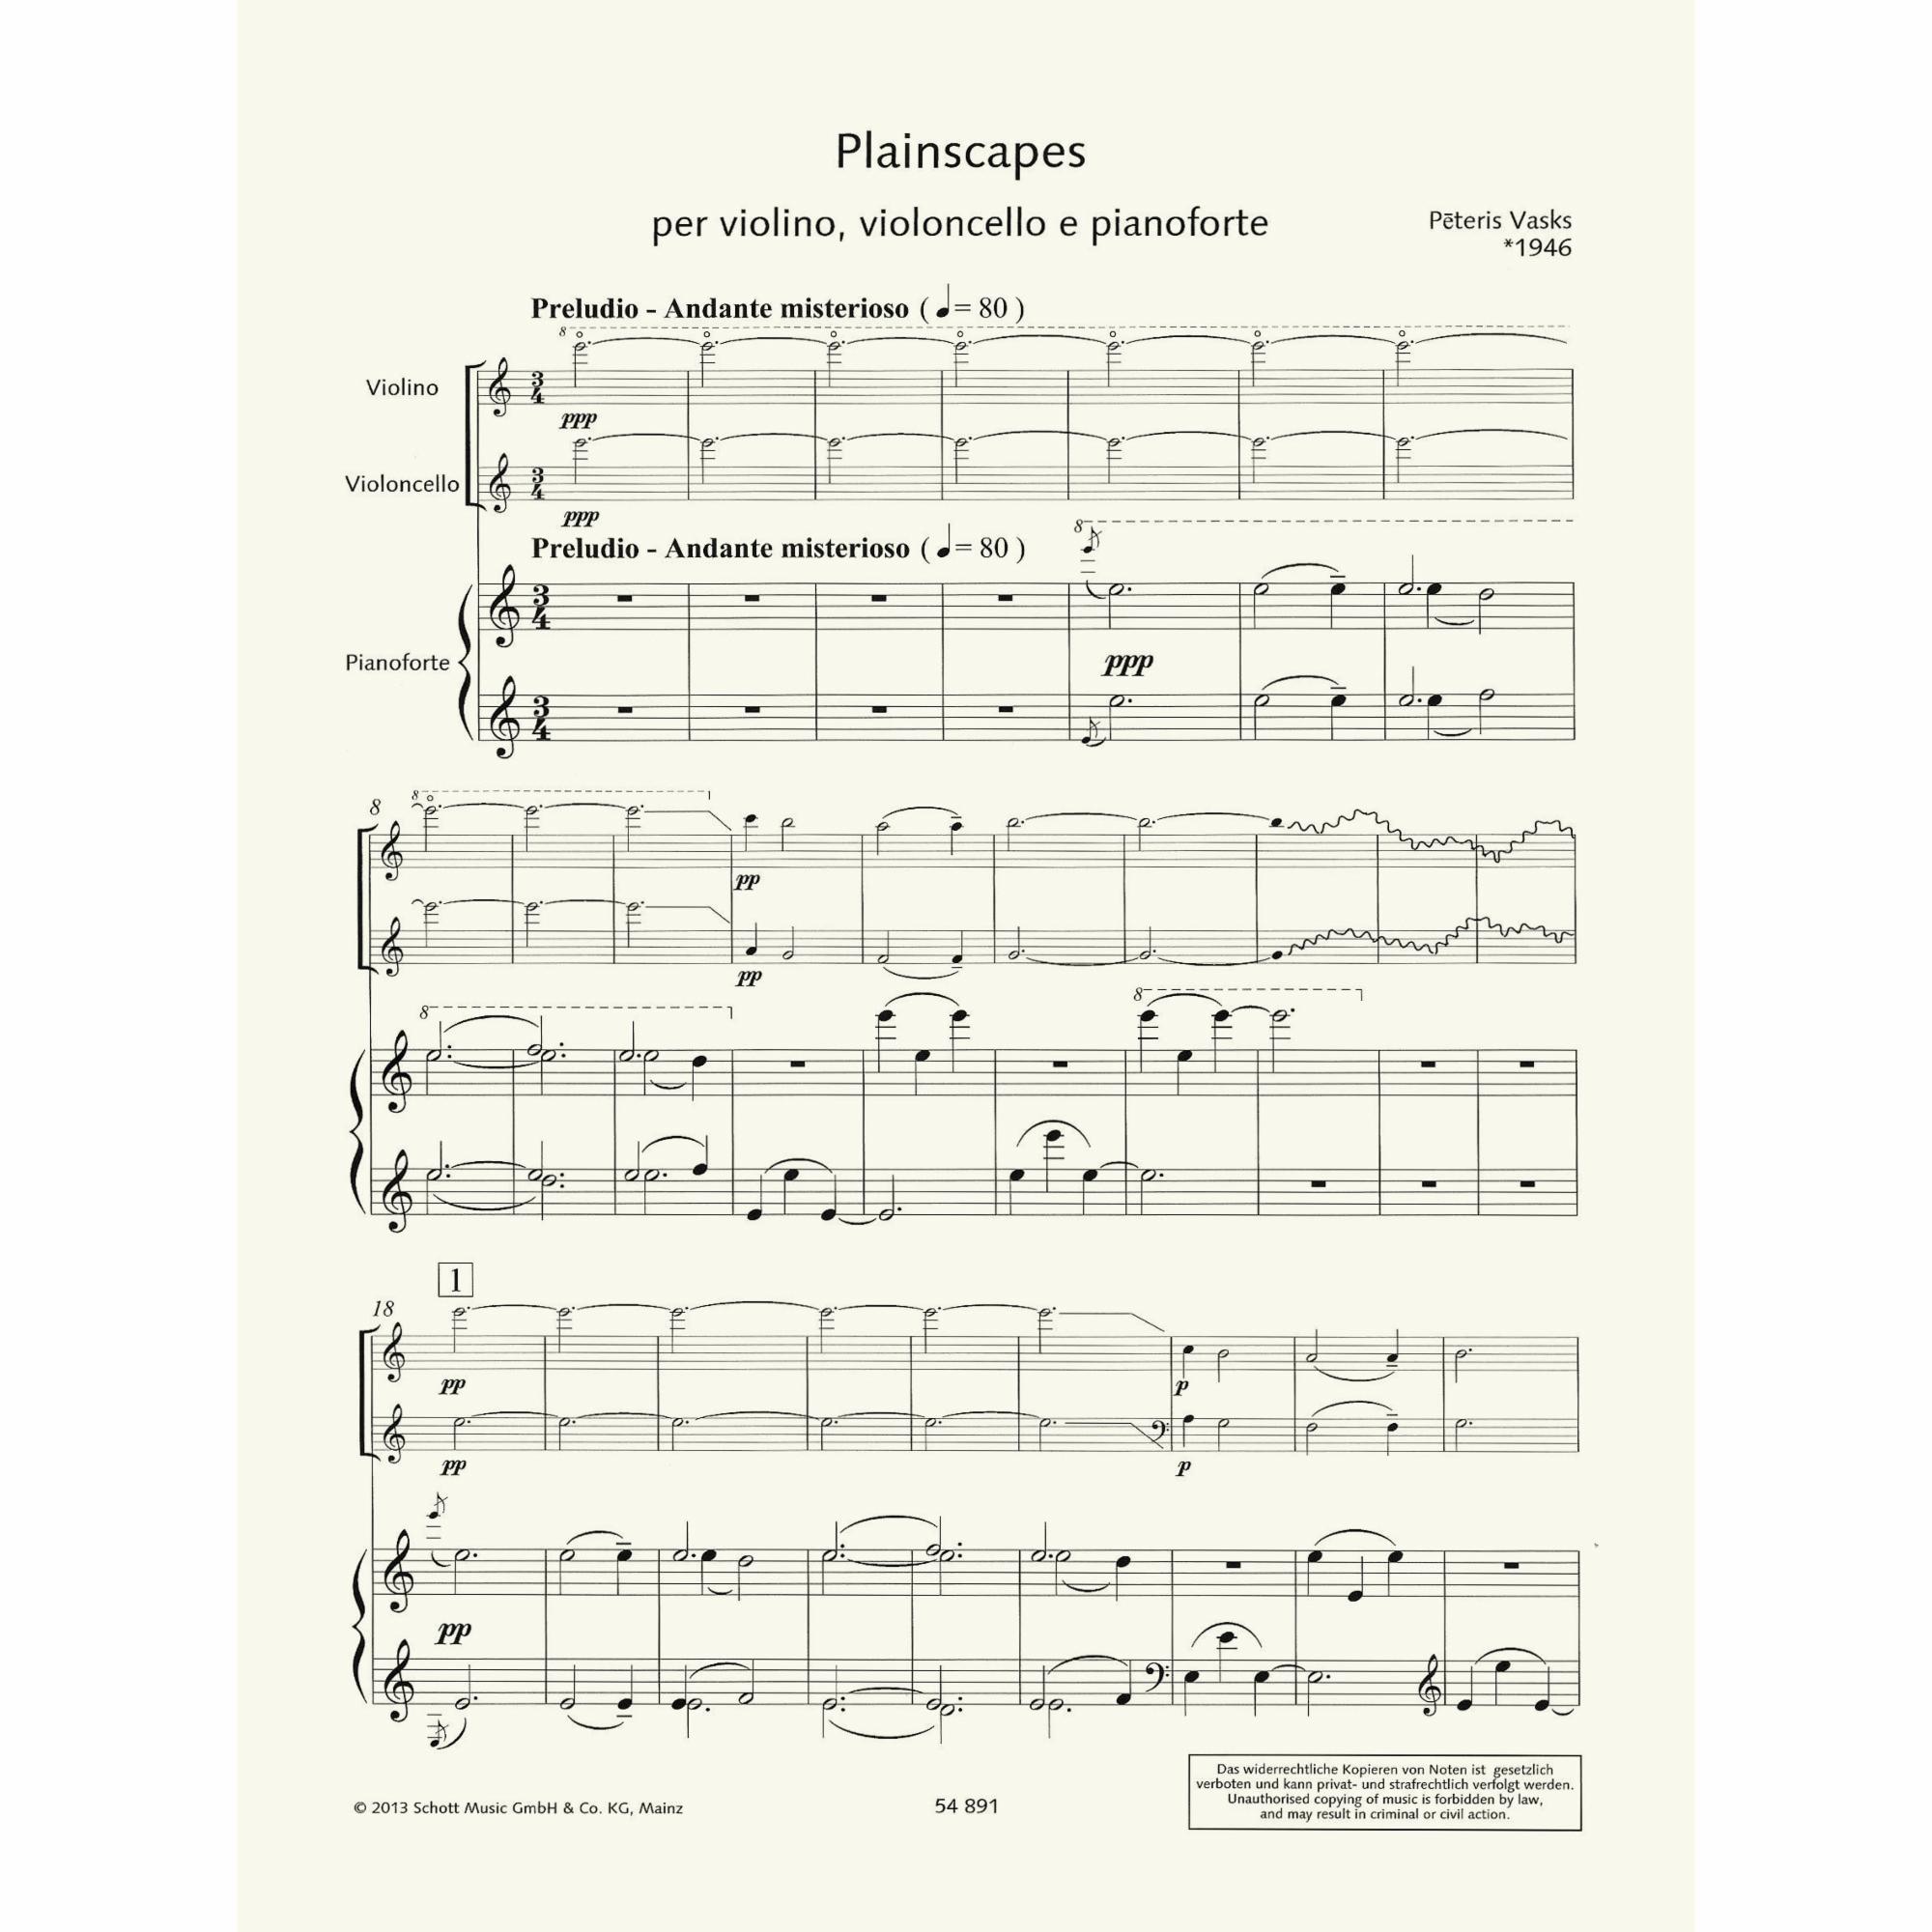 Sample: Piano (Pg. 5)